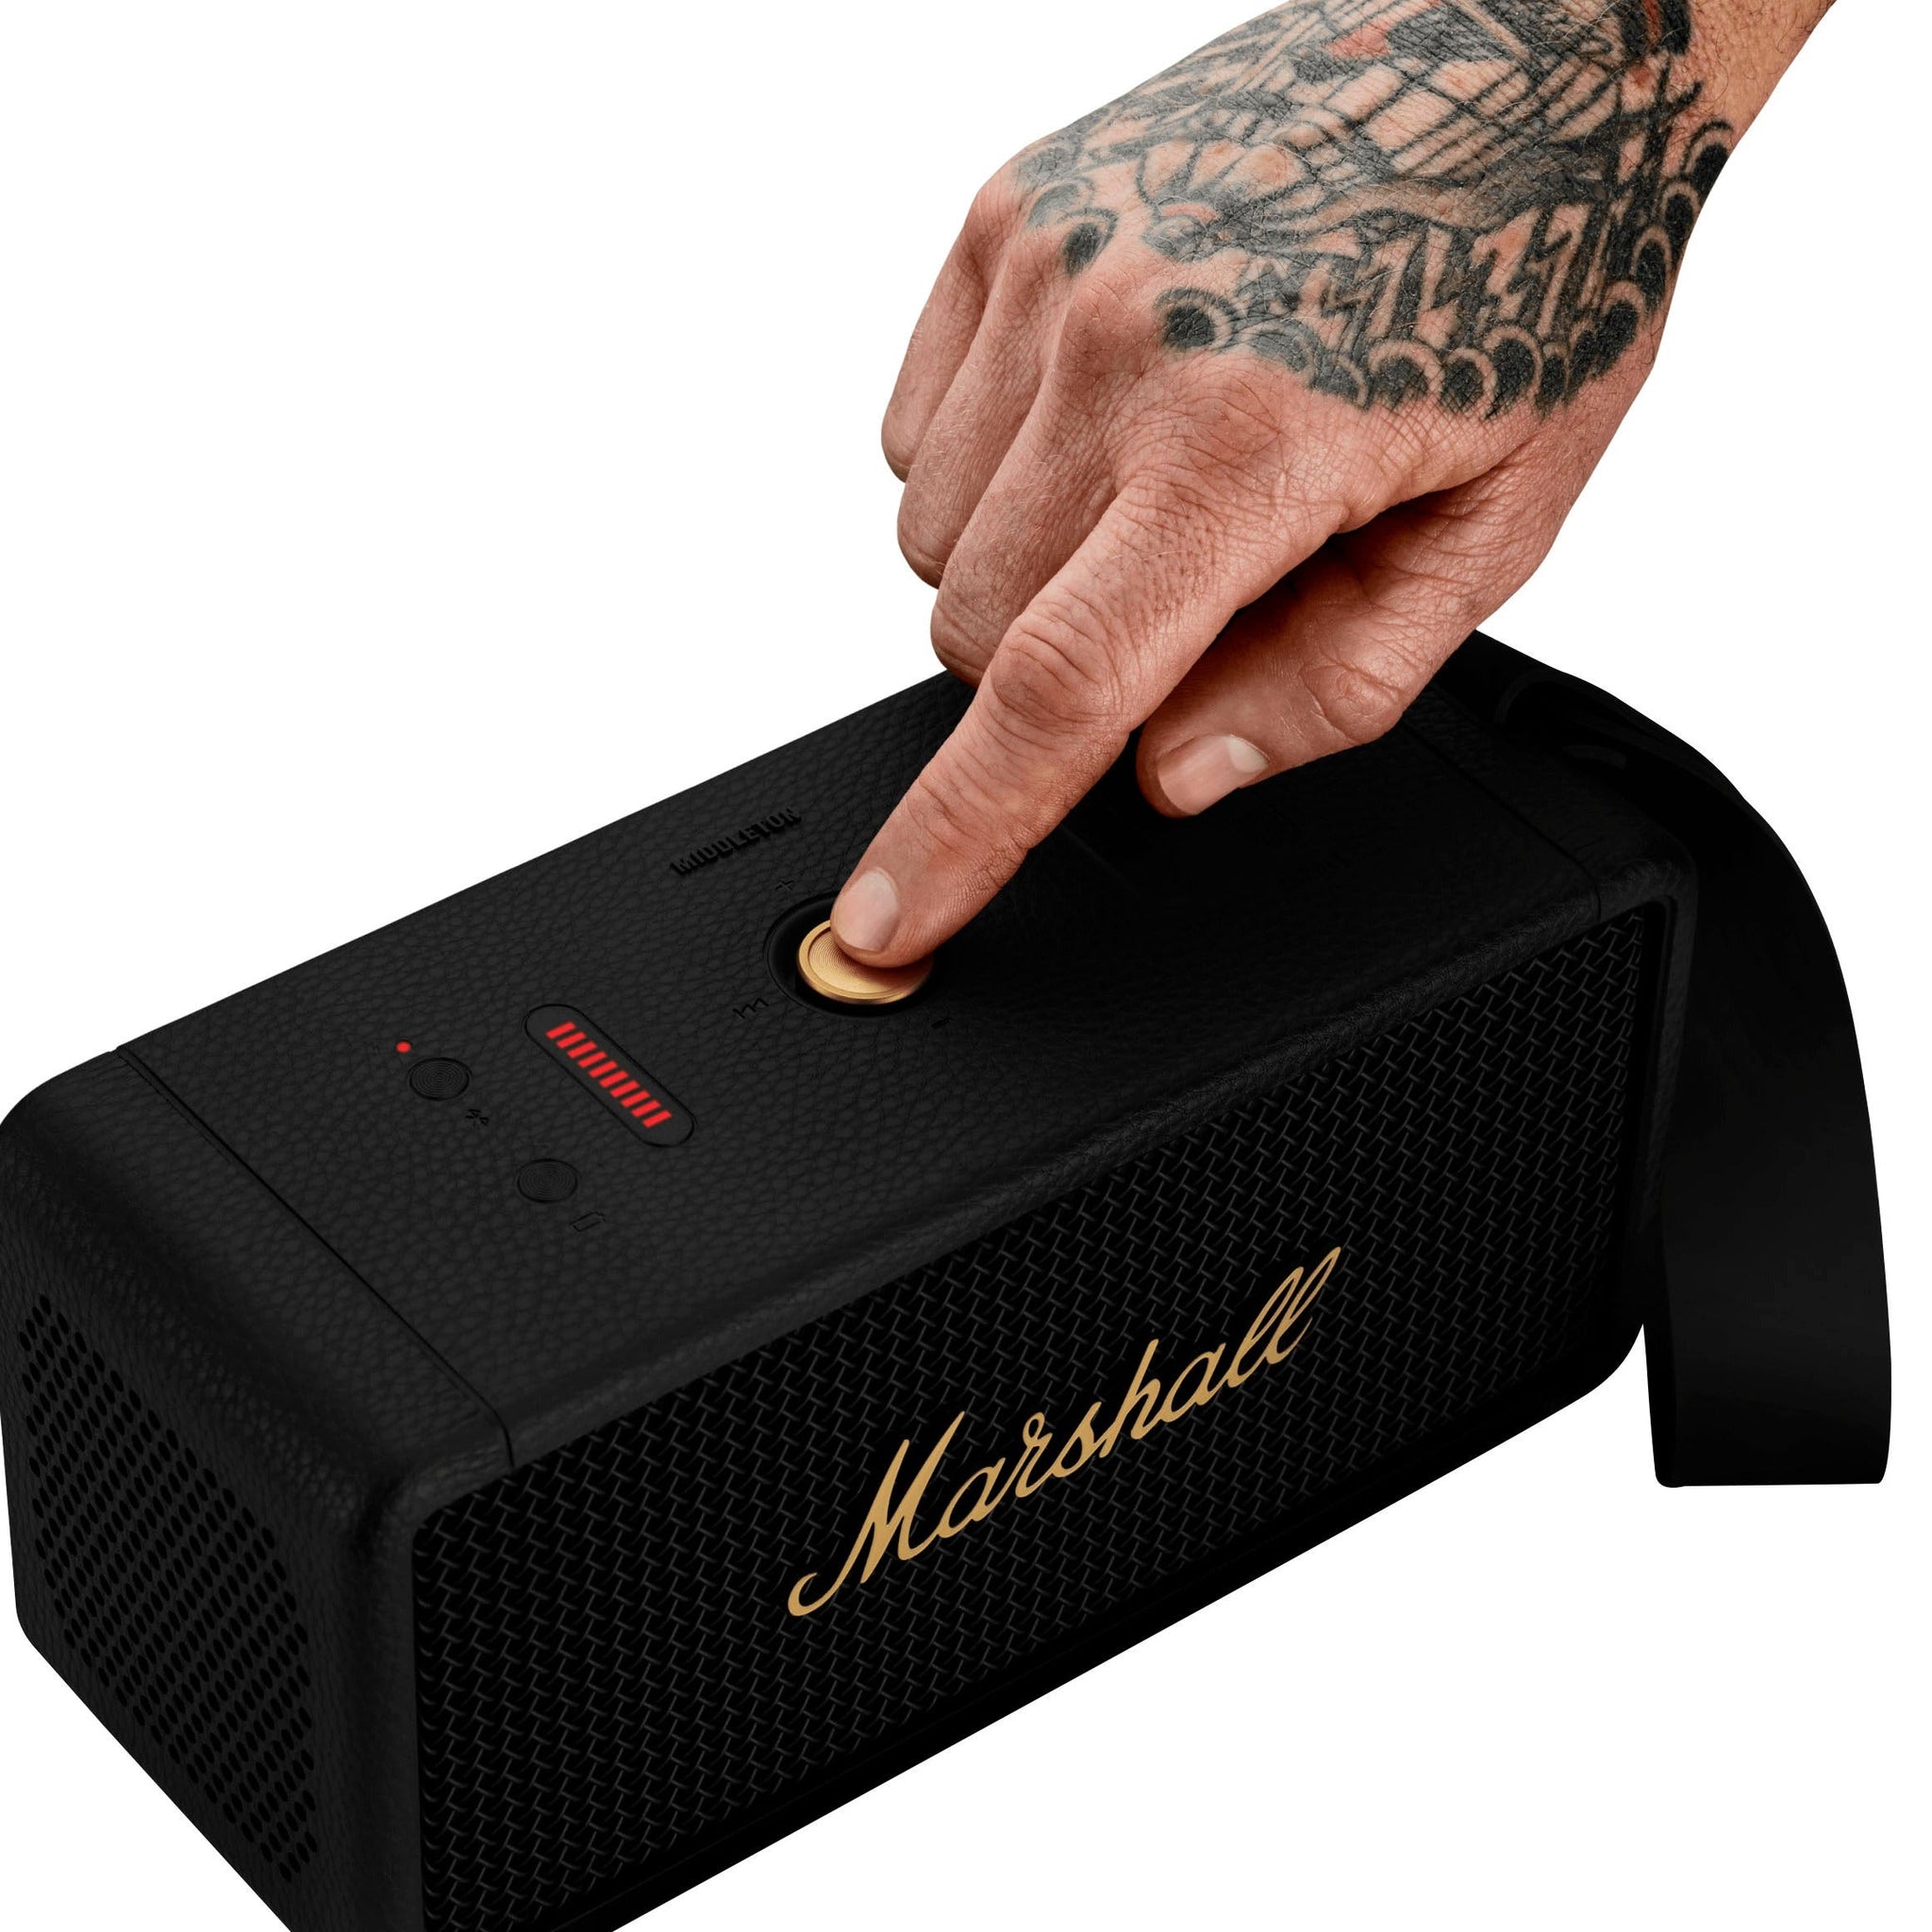 Marshall Middleton Bluetooth Speaker - Black and Brass - iShop